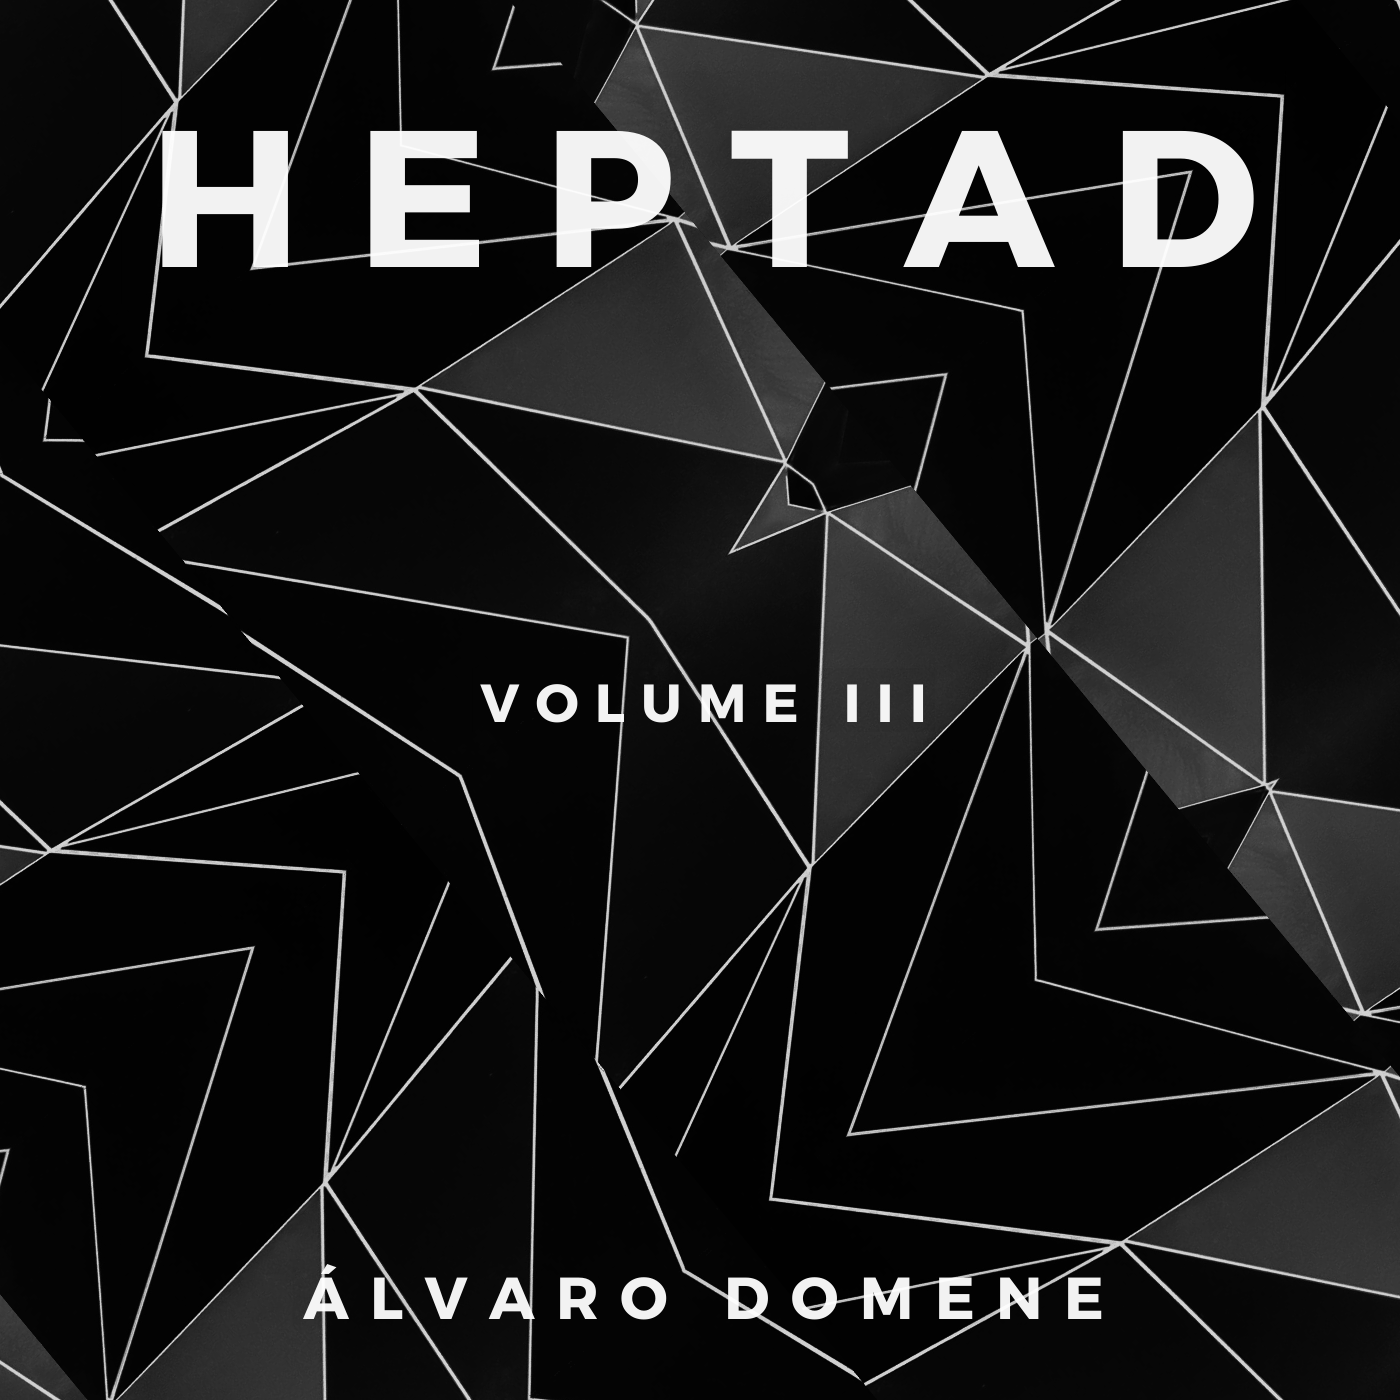 HEPTAD (Volume III) by Álvaro Domene